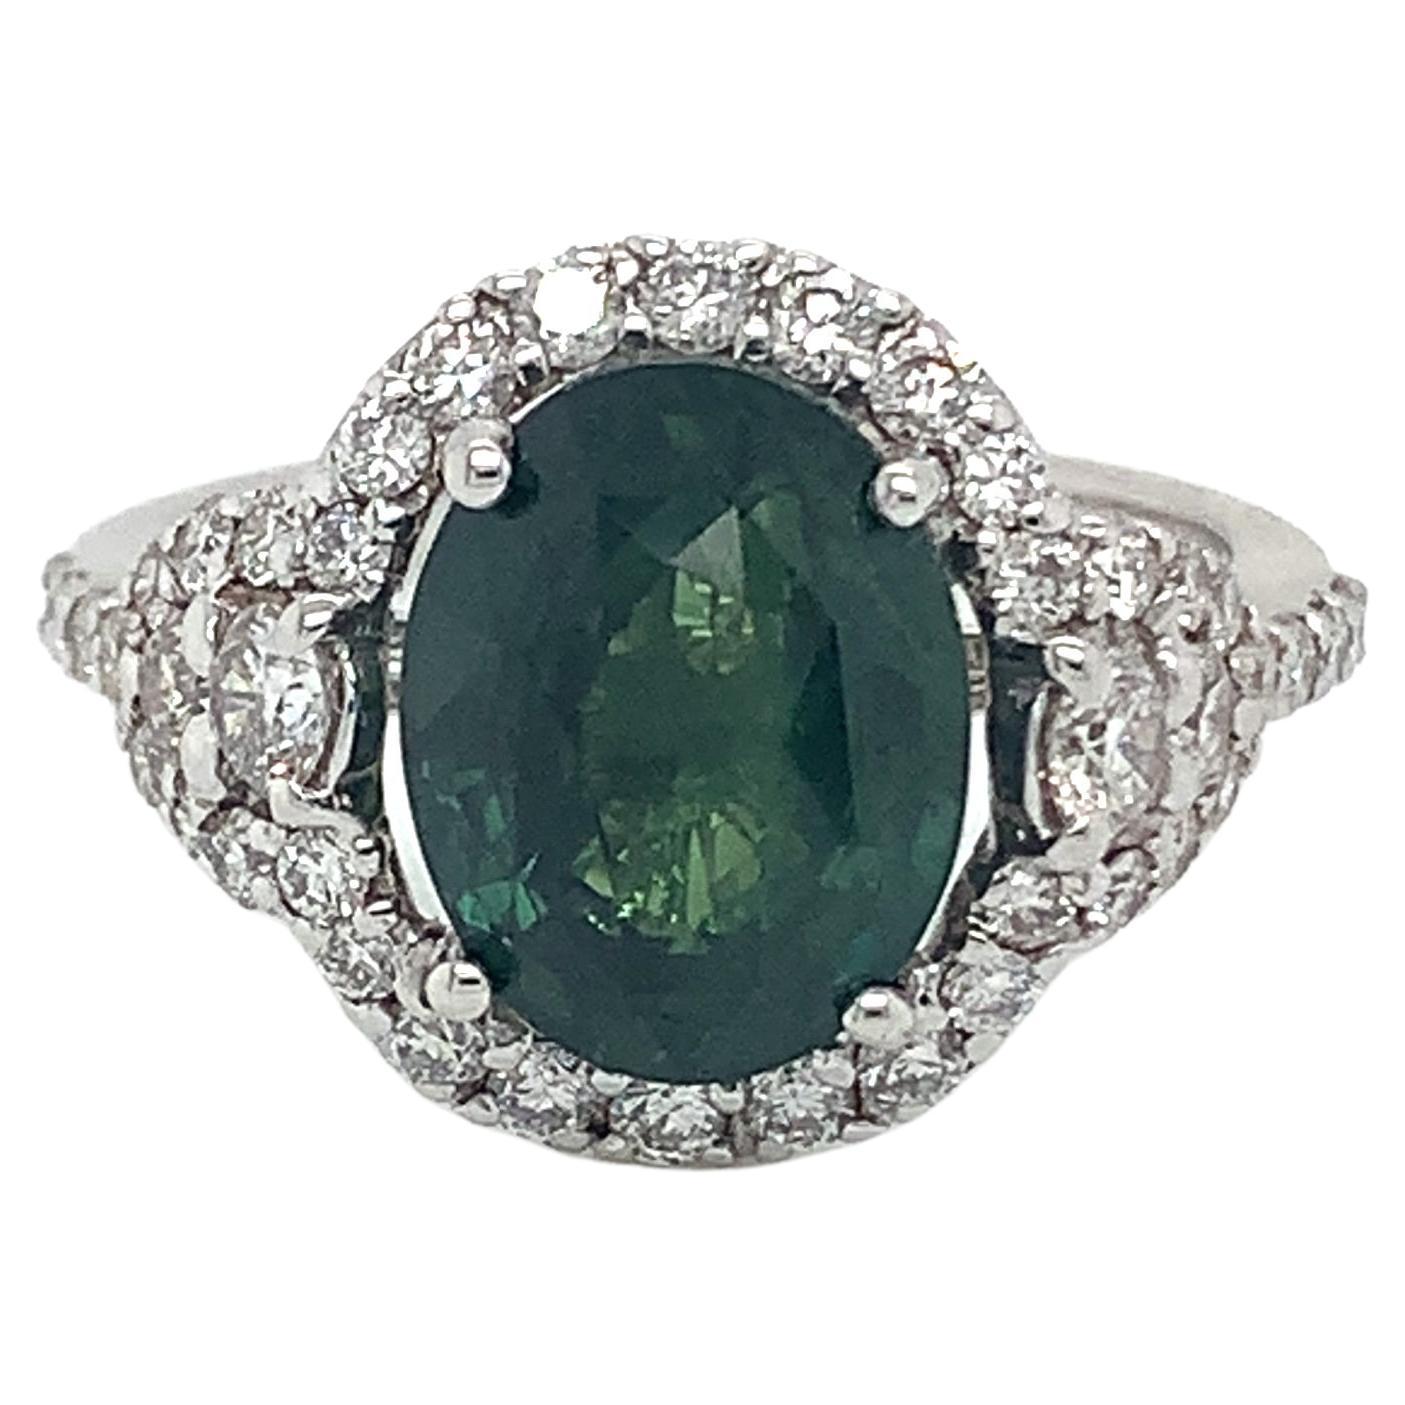 4.69 Carat Oval Green Sapphire & Diamond Ring in 18 Karat White Gold